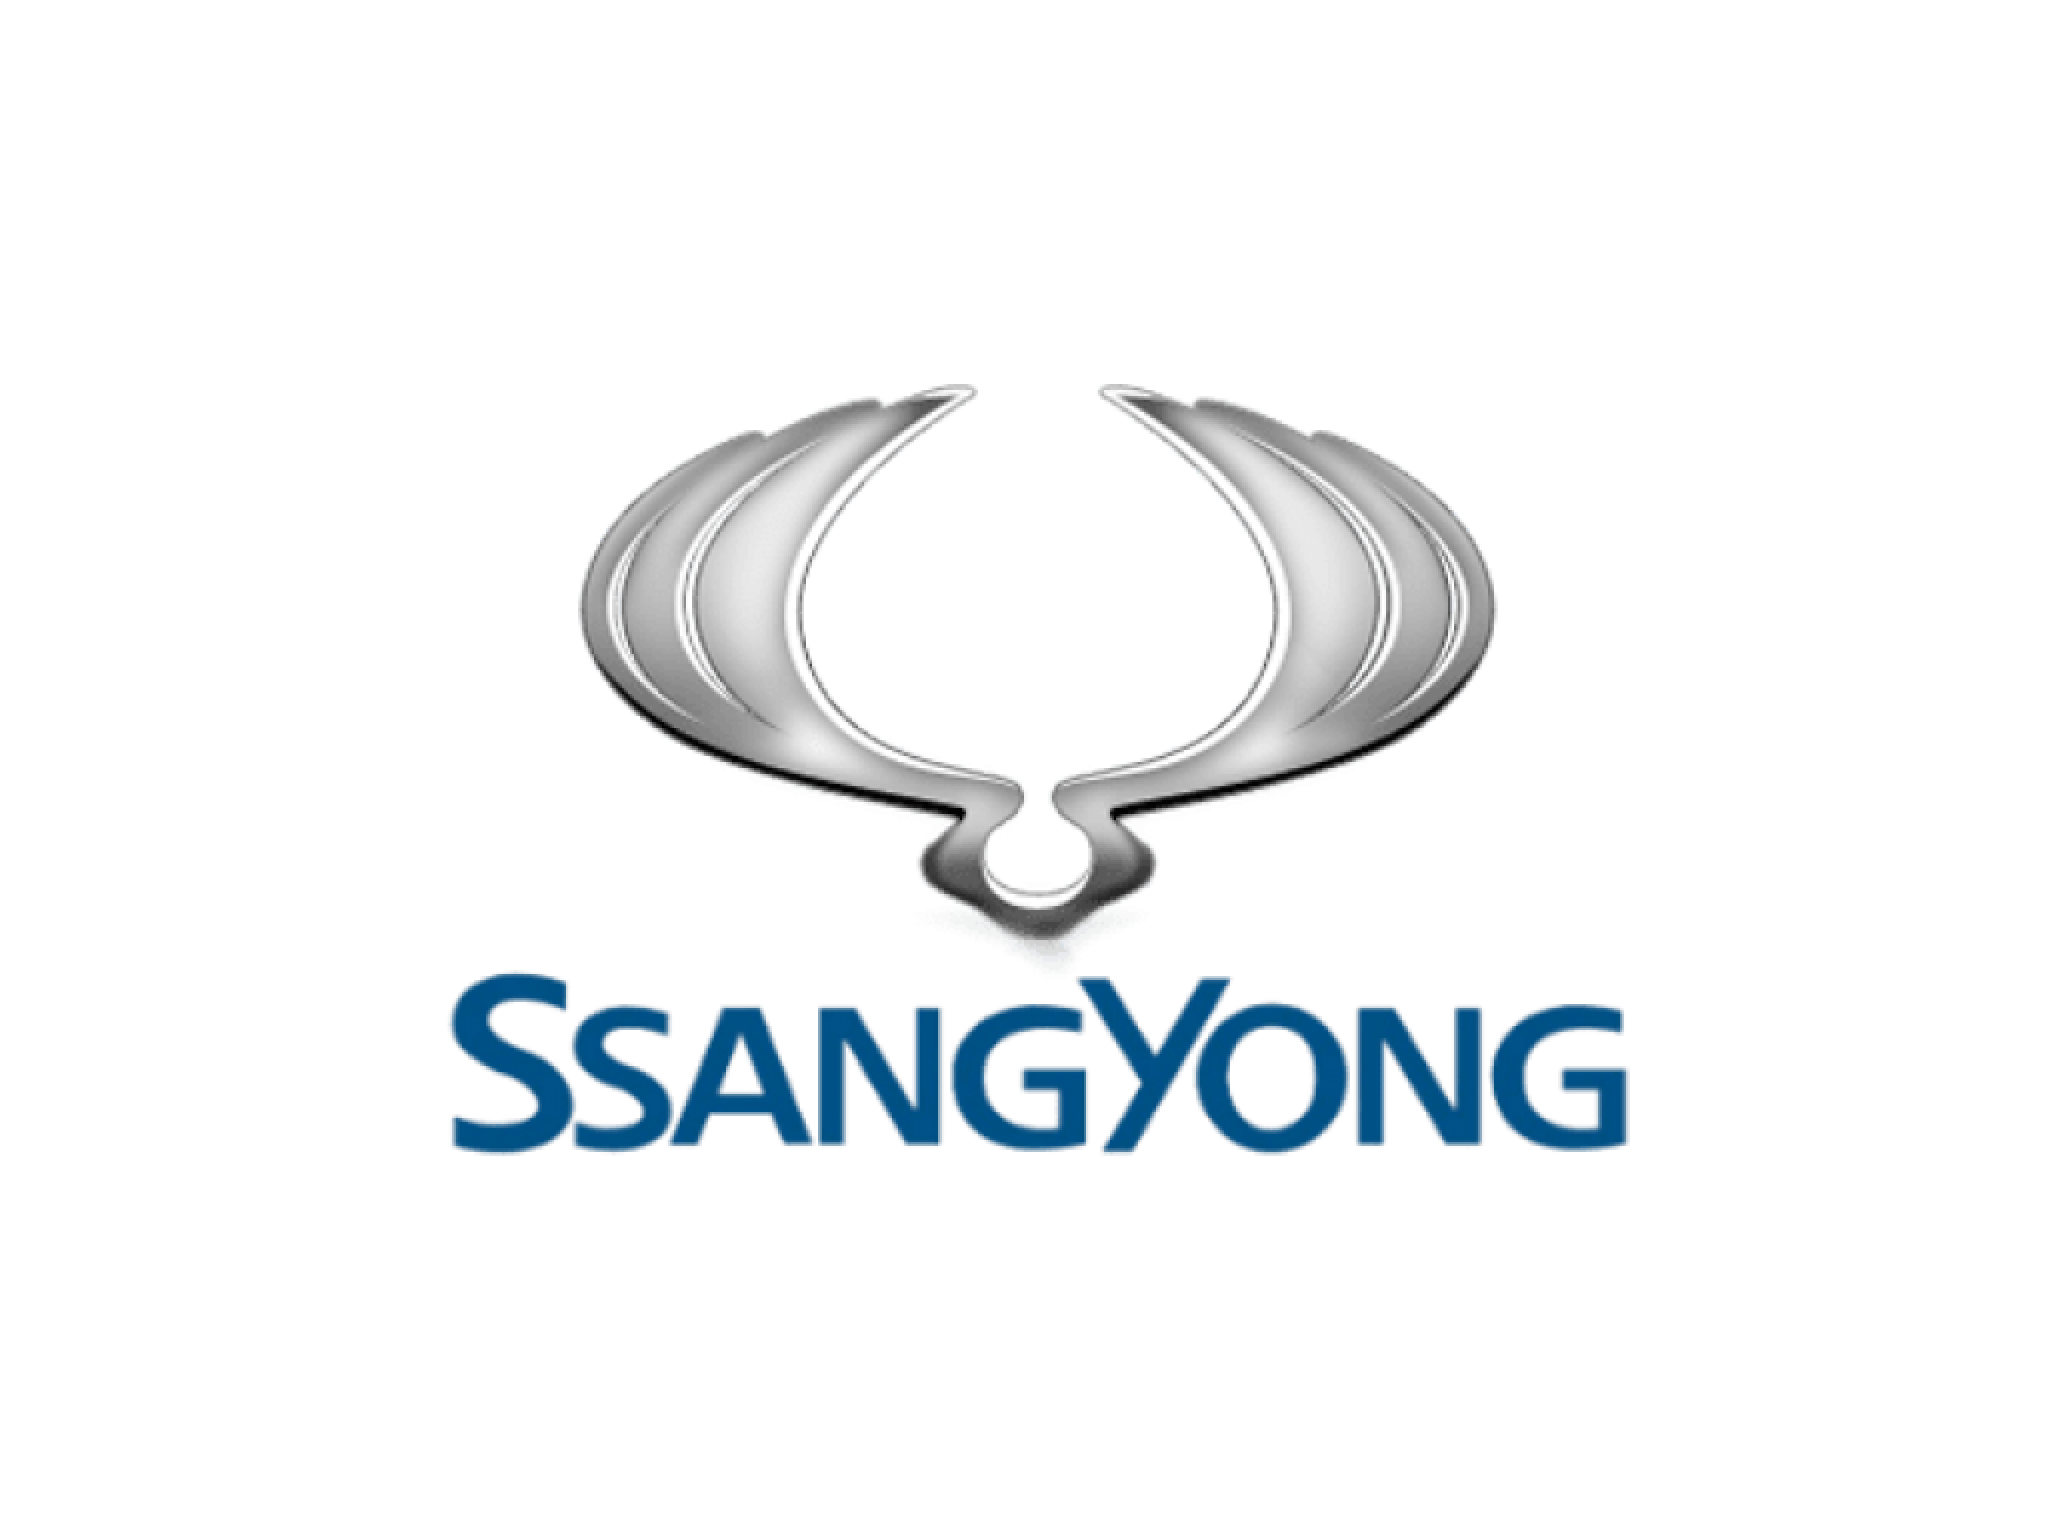 Значок саньенг. Эмблема Санг Йонг. Марки машин Санг енг значок. SSANGYONG логотип на авто. Марка Санг Йонг значок.